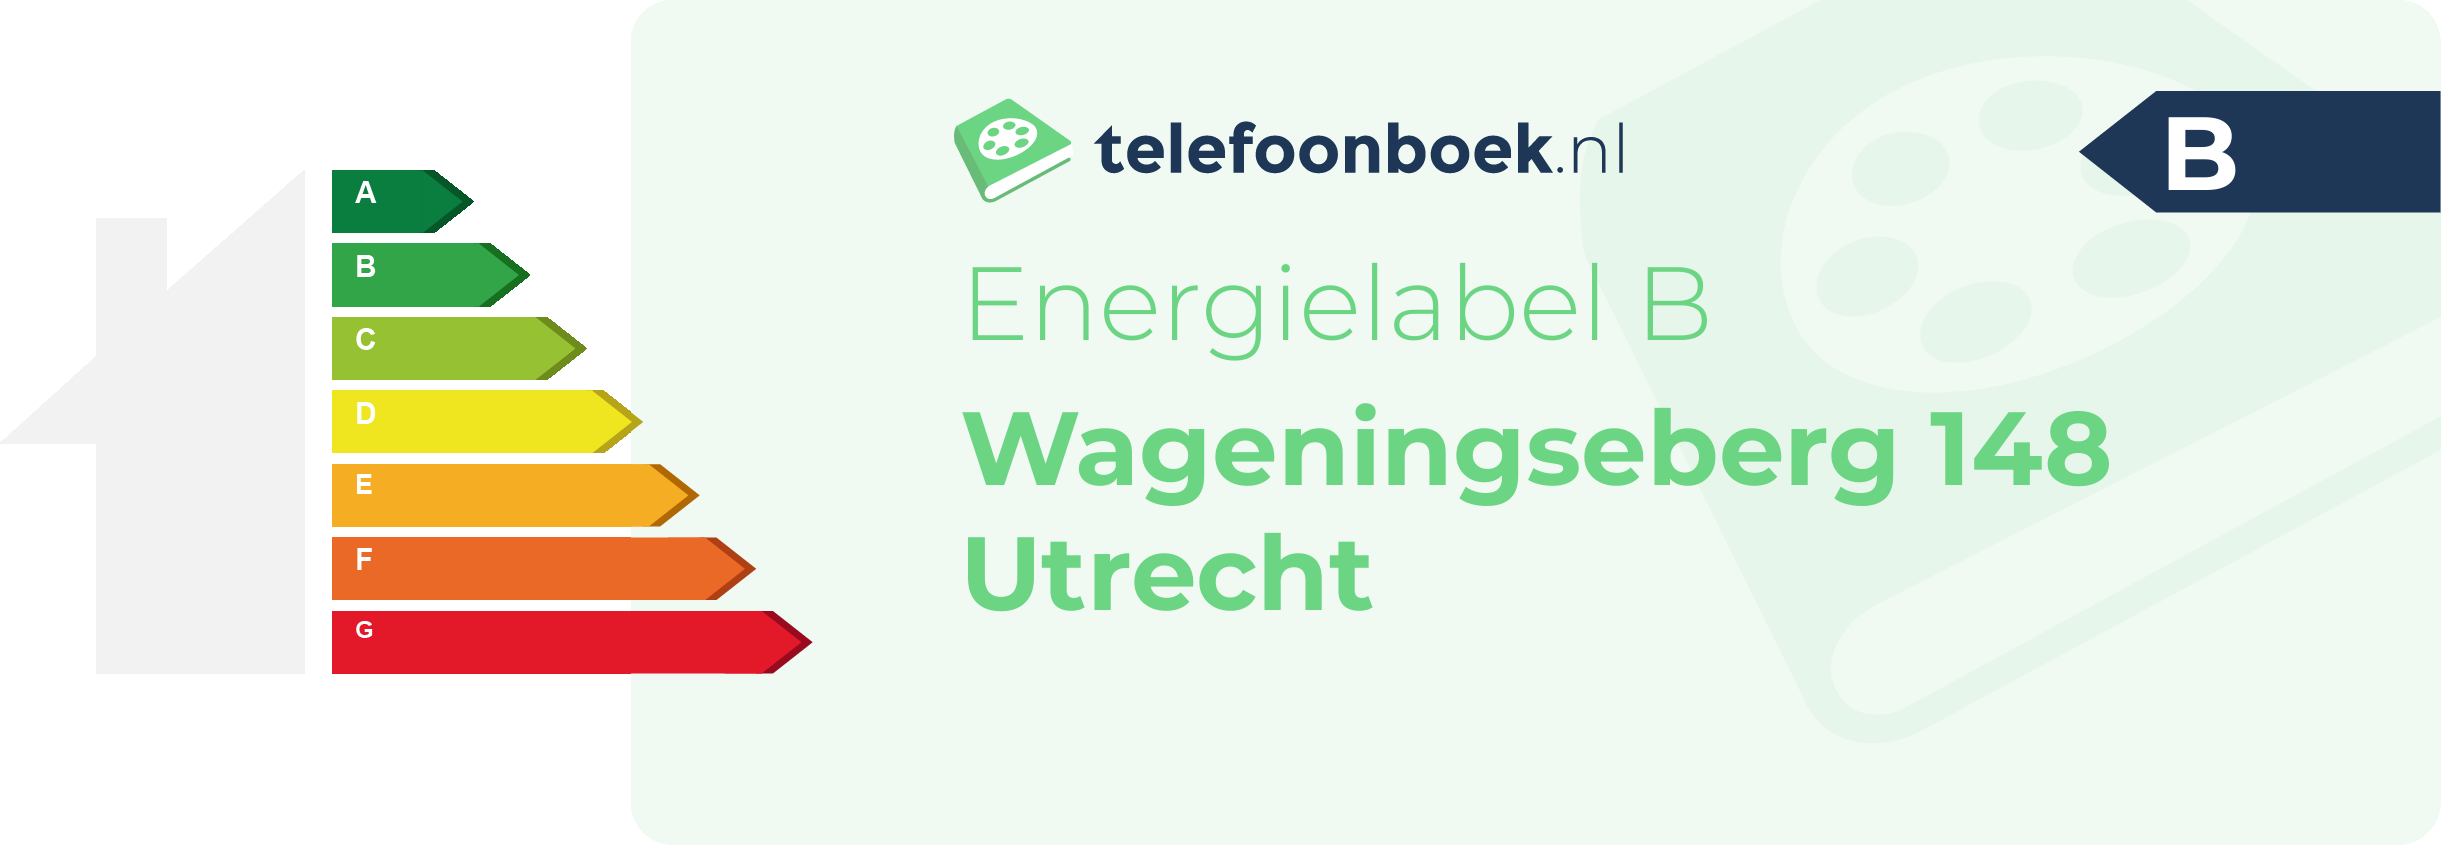 Energielabel Wageningseberg 148 Utrecht